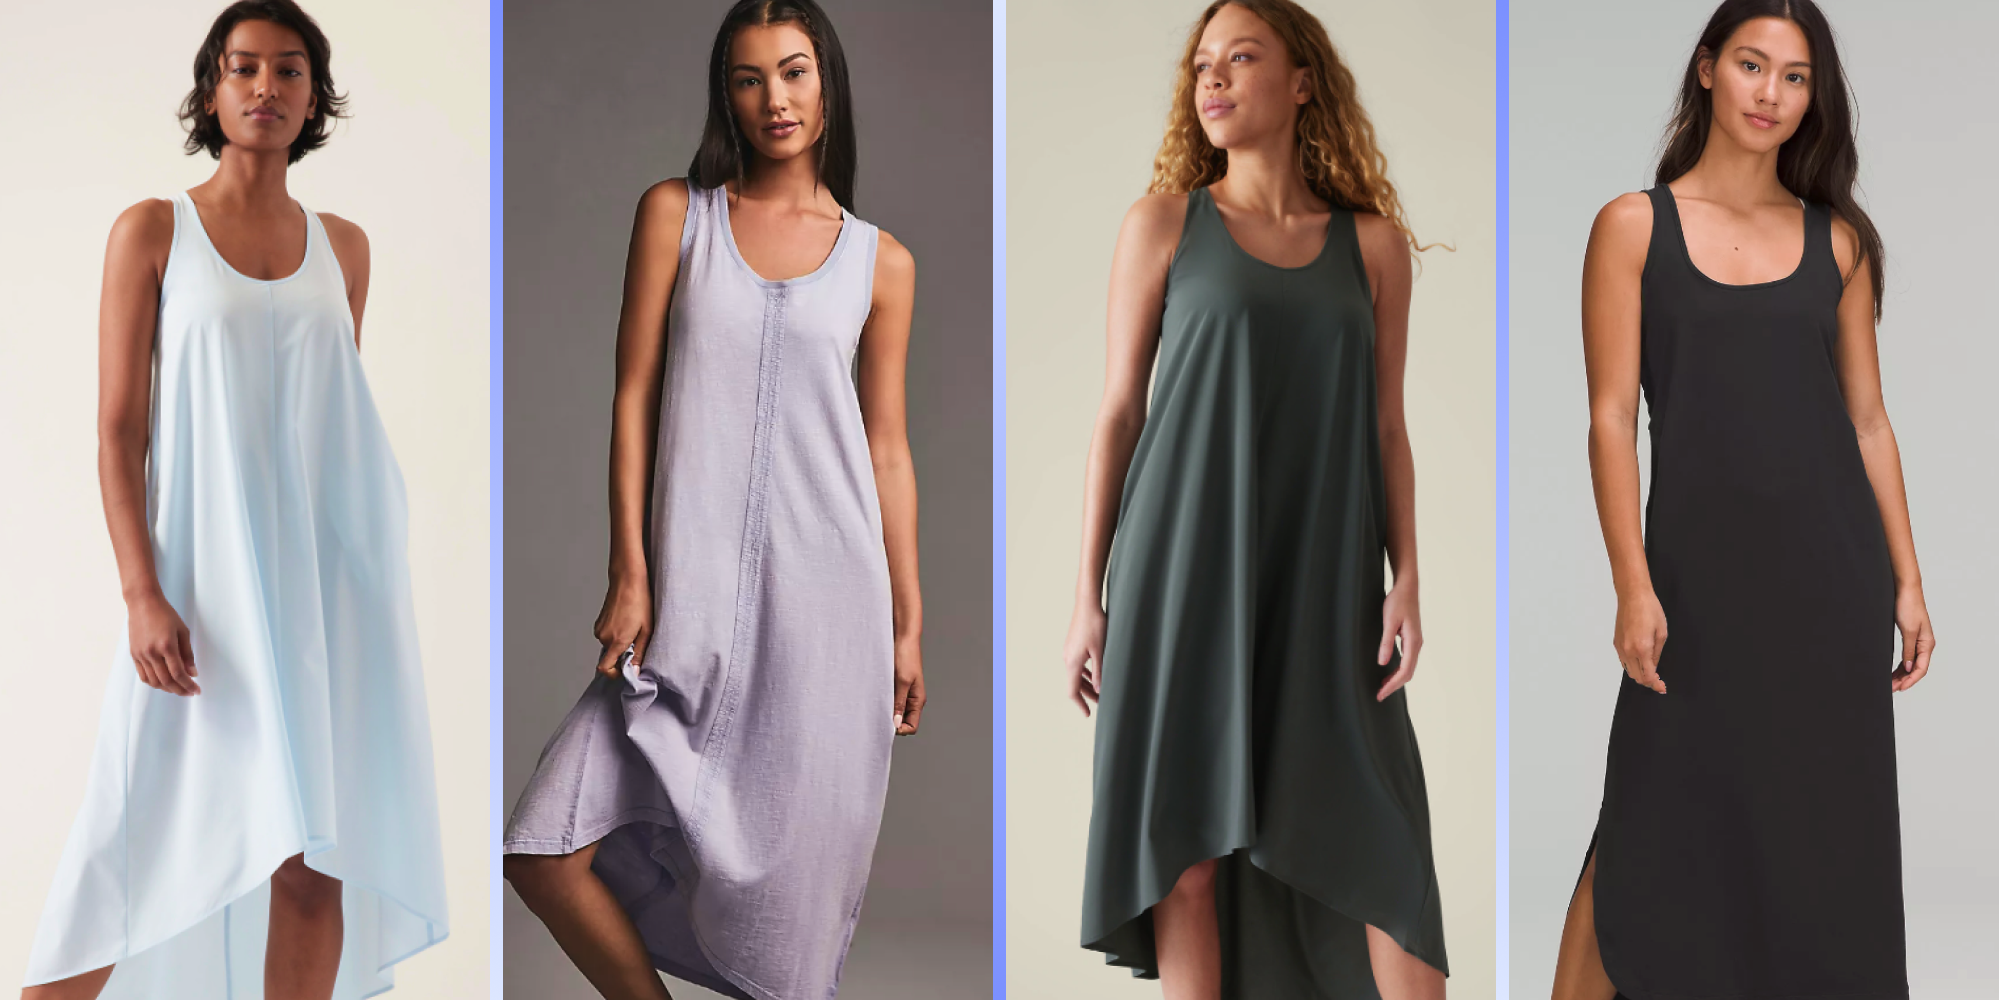 stylish dresses for women